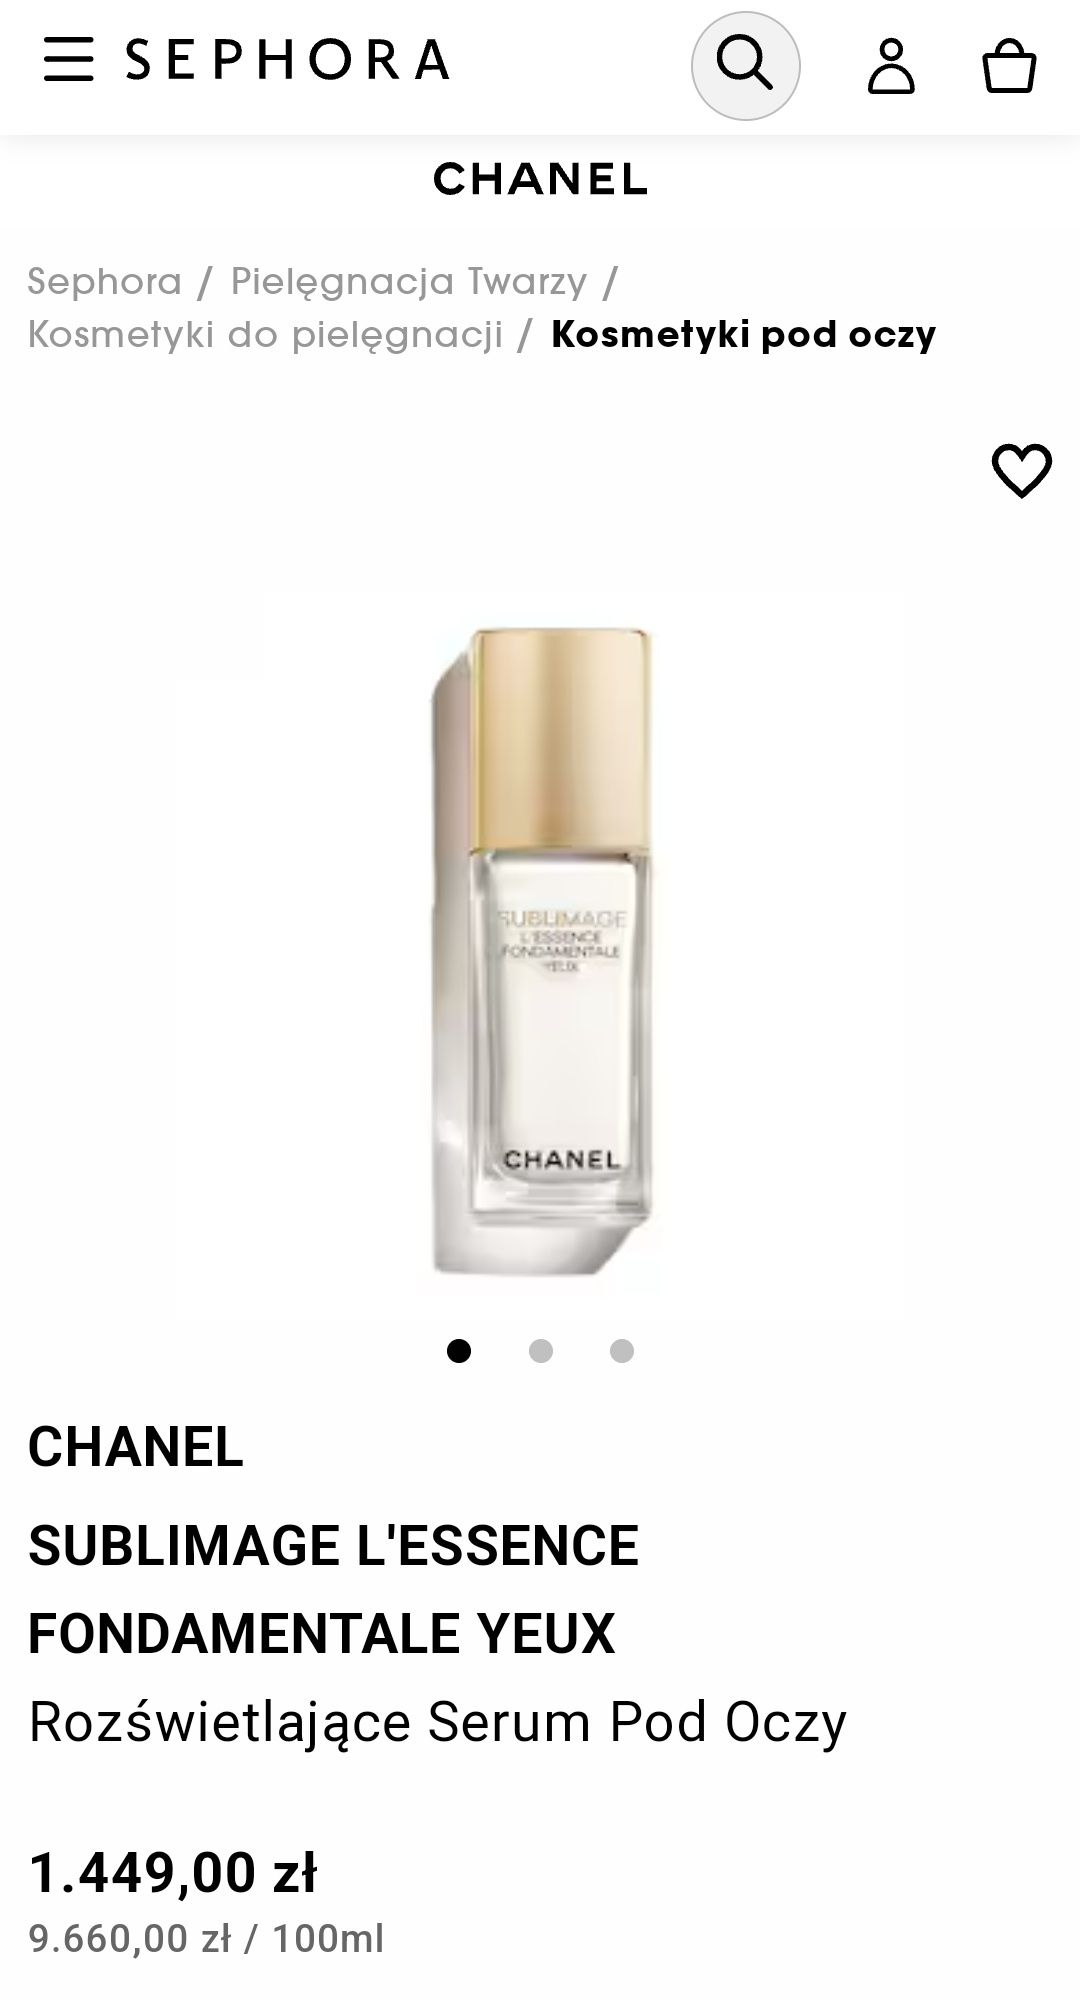 Chanel SublimageL'Essence serum